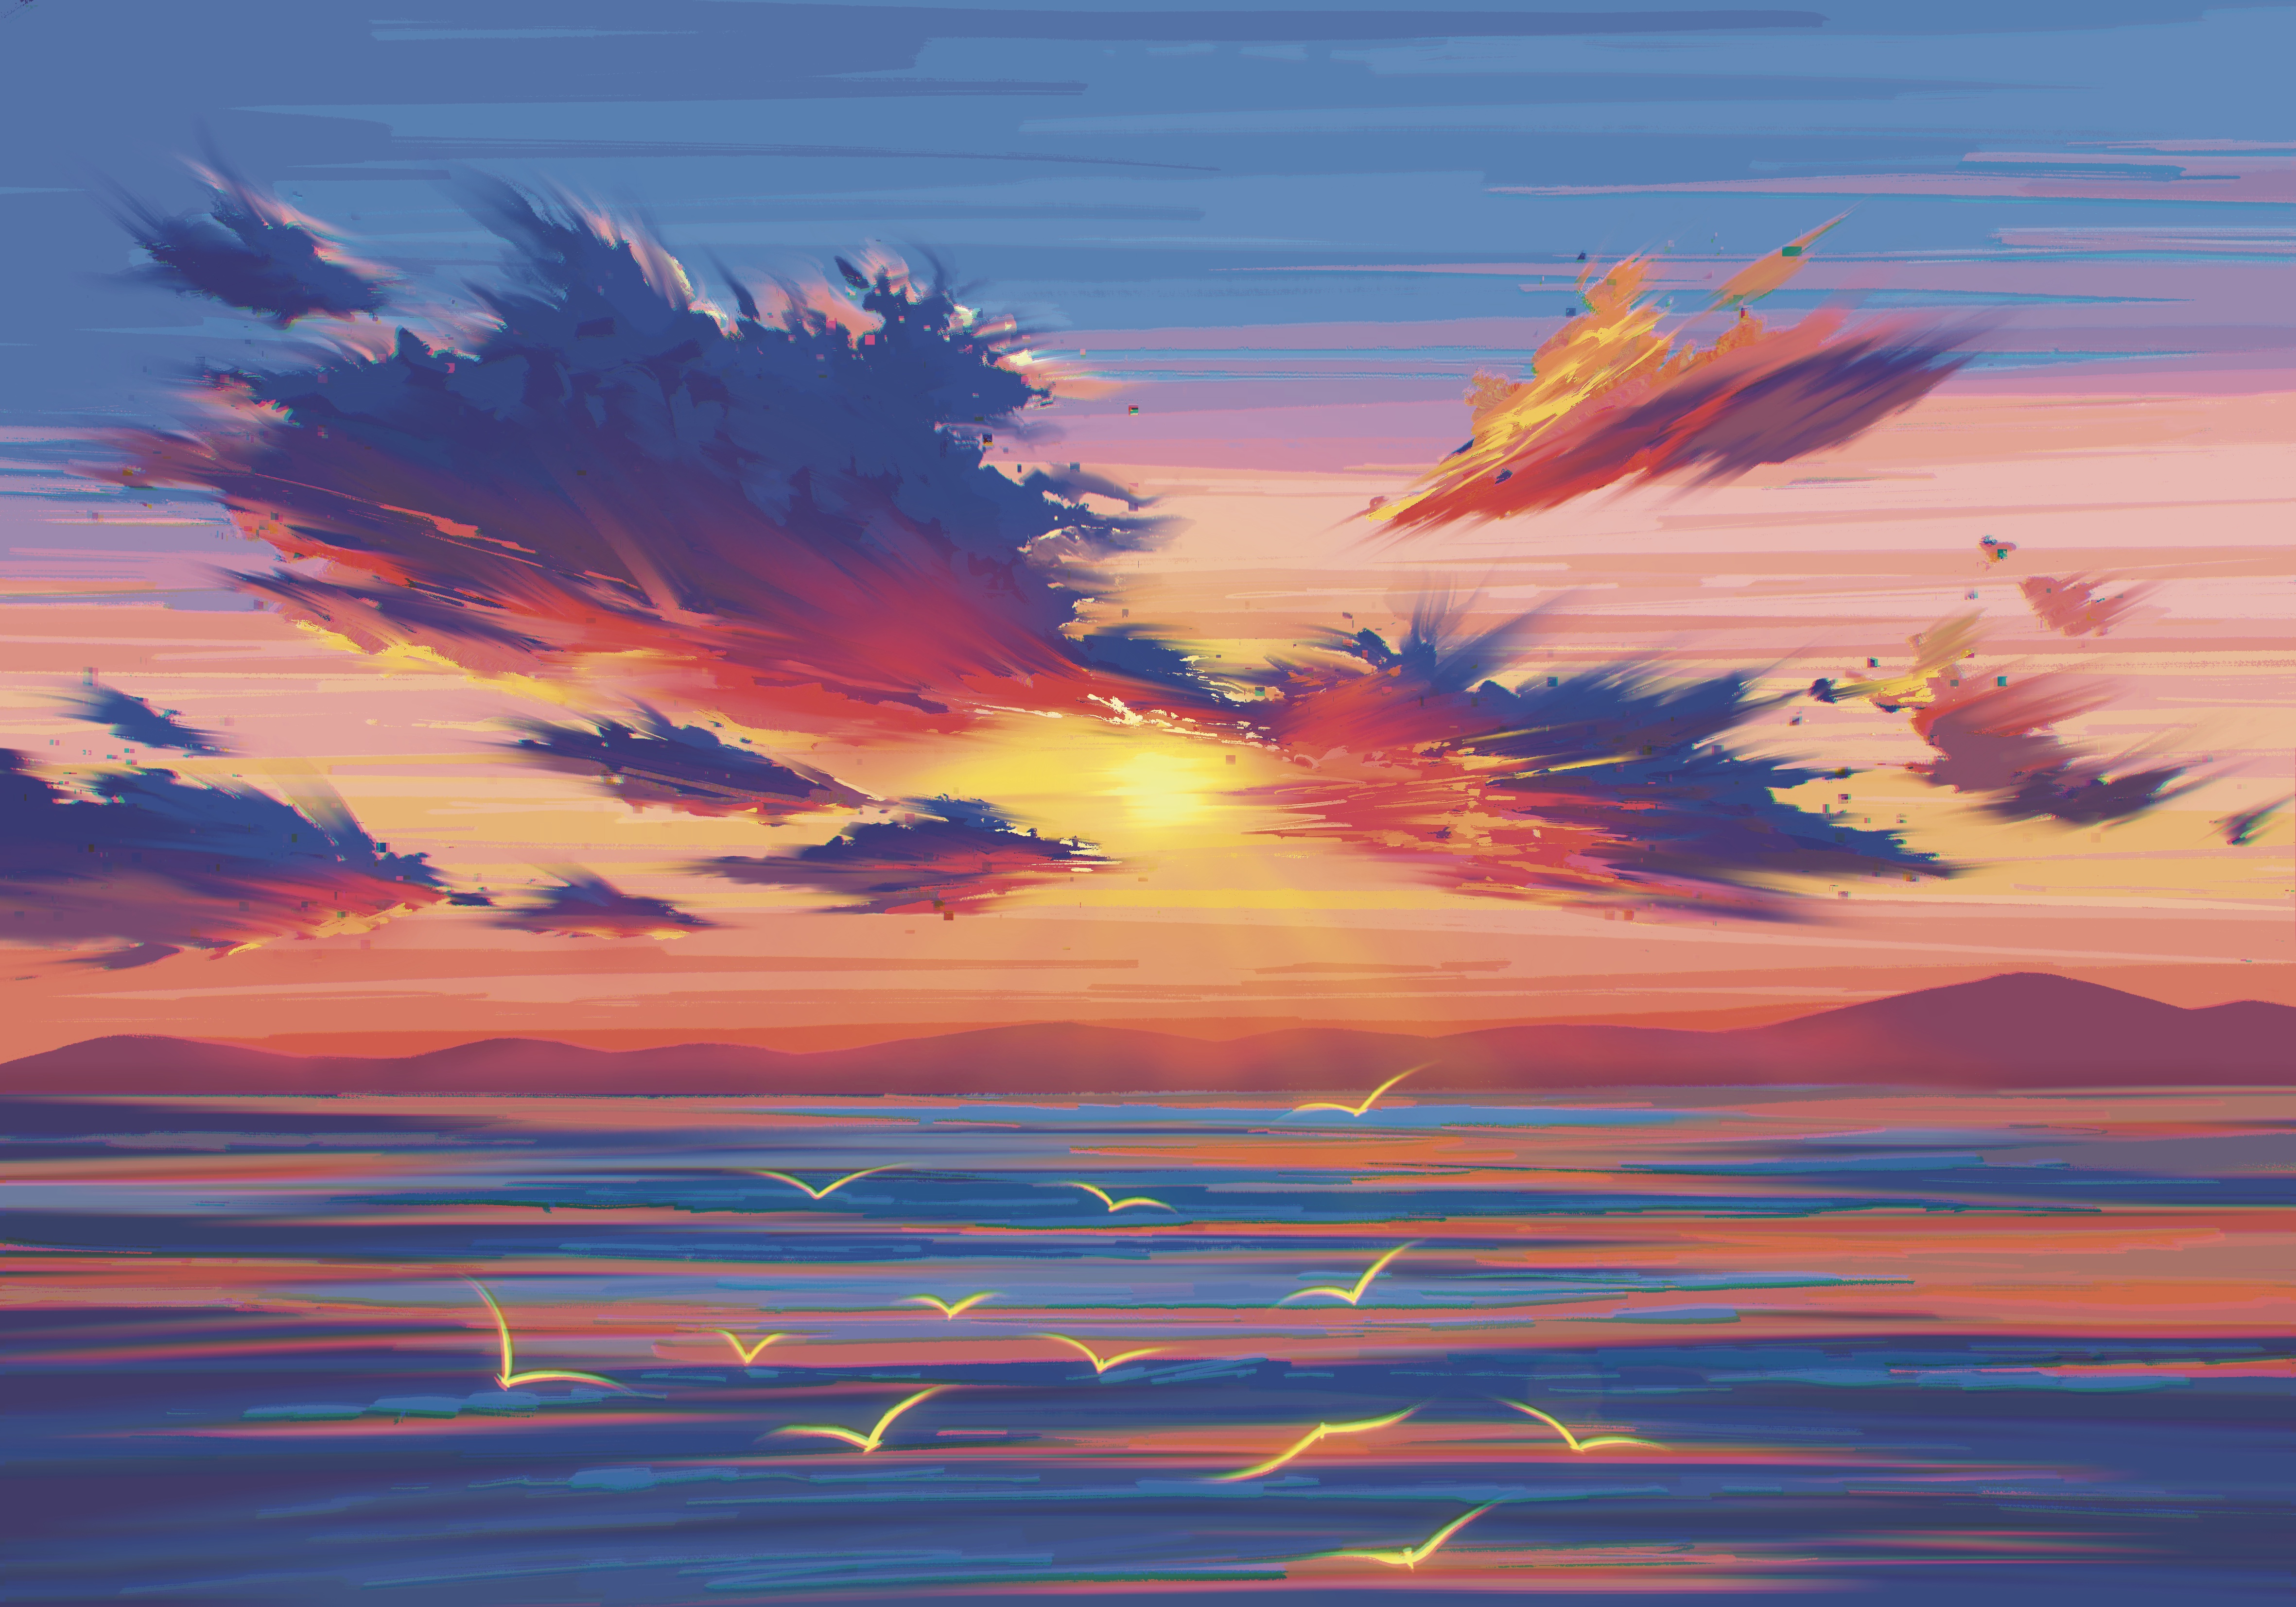 Digital Art Artwork Illustration Painting Landscape Clouds Sea Water Mountains Sun Sunlight Sunset B 4724x3307